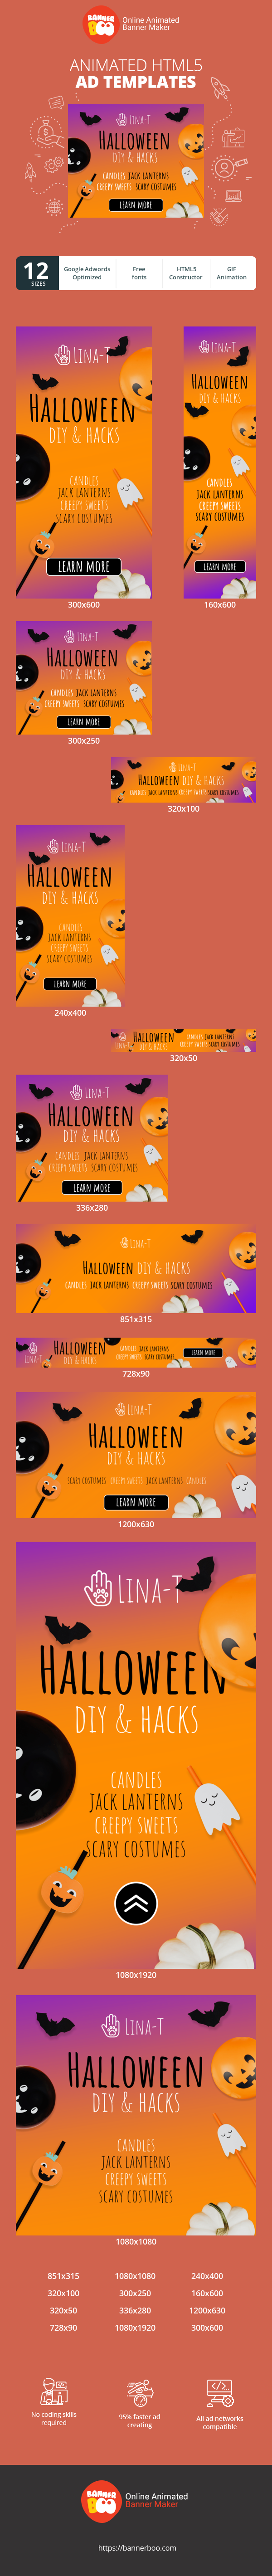 Szablon reklamy banerowej — Halloween Diy & Hacks — Candles Jack Laterns Creepy Sweets Scary Costumes